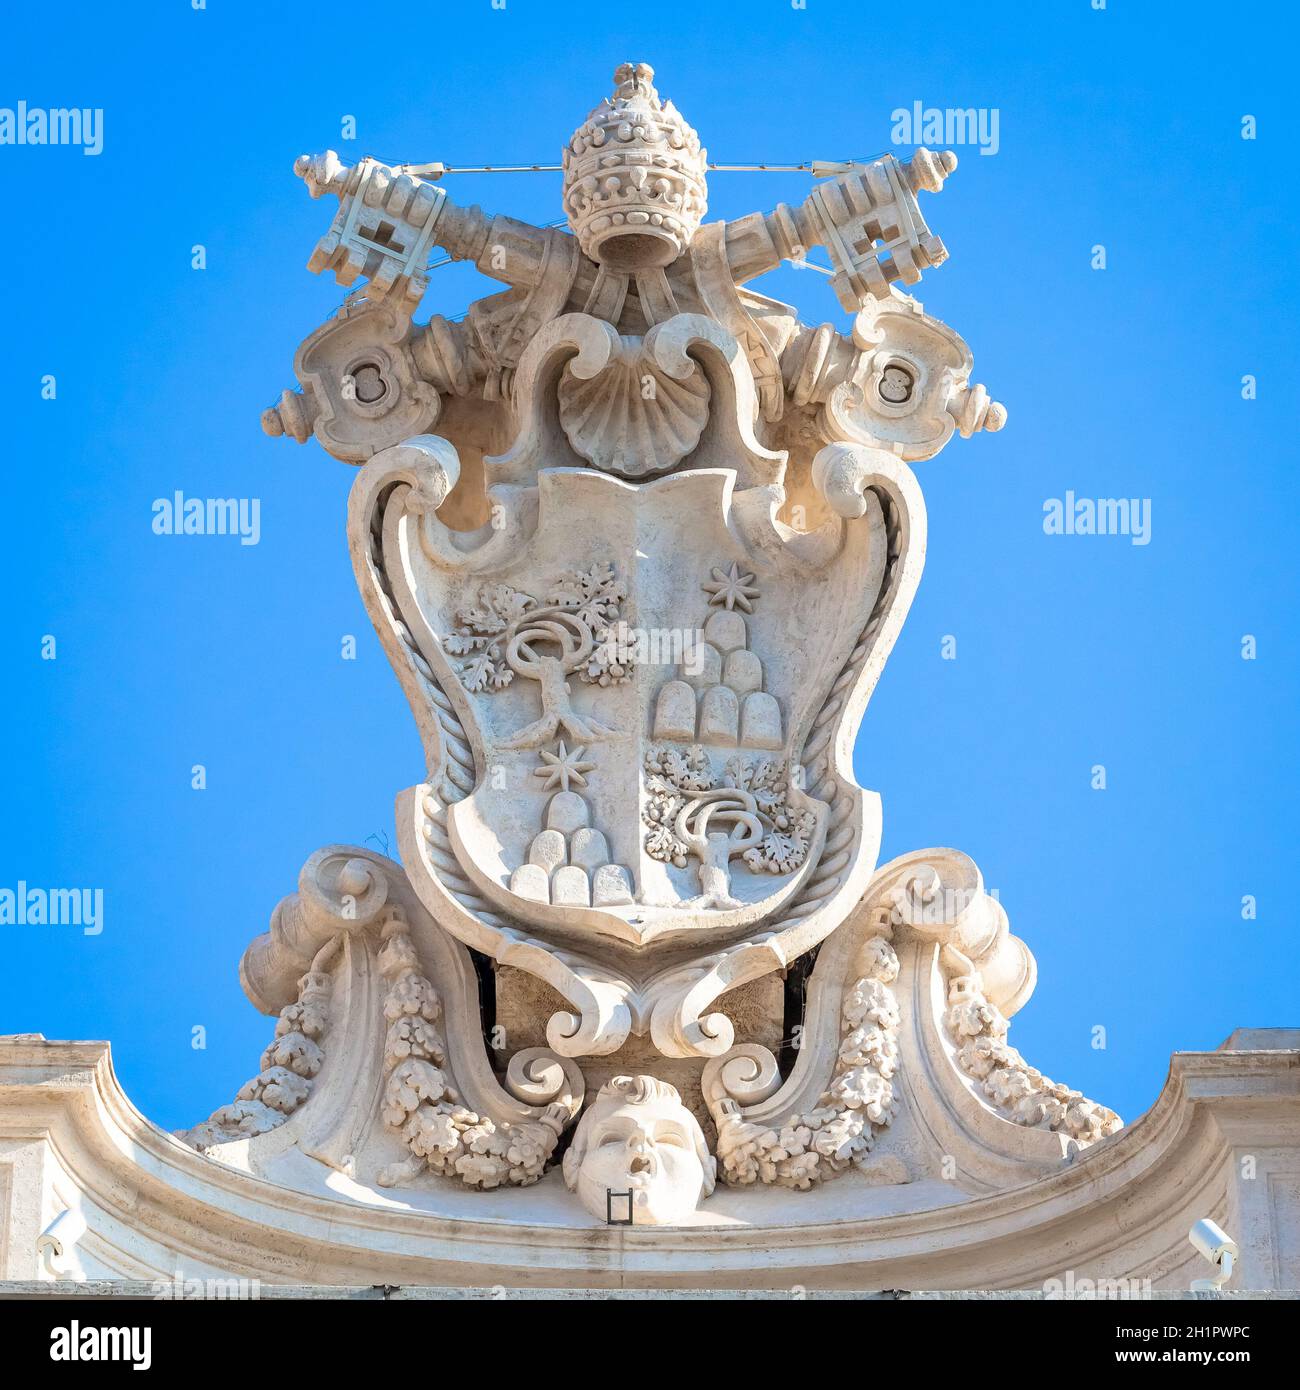 ROM, ITALIEN - CIRCA AUGUST 2020: Antikes Vatikansymbol auf dem Petersplatz Stockfoto